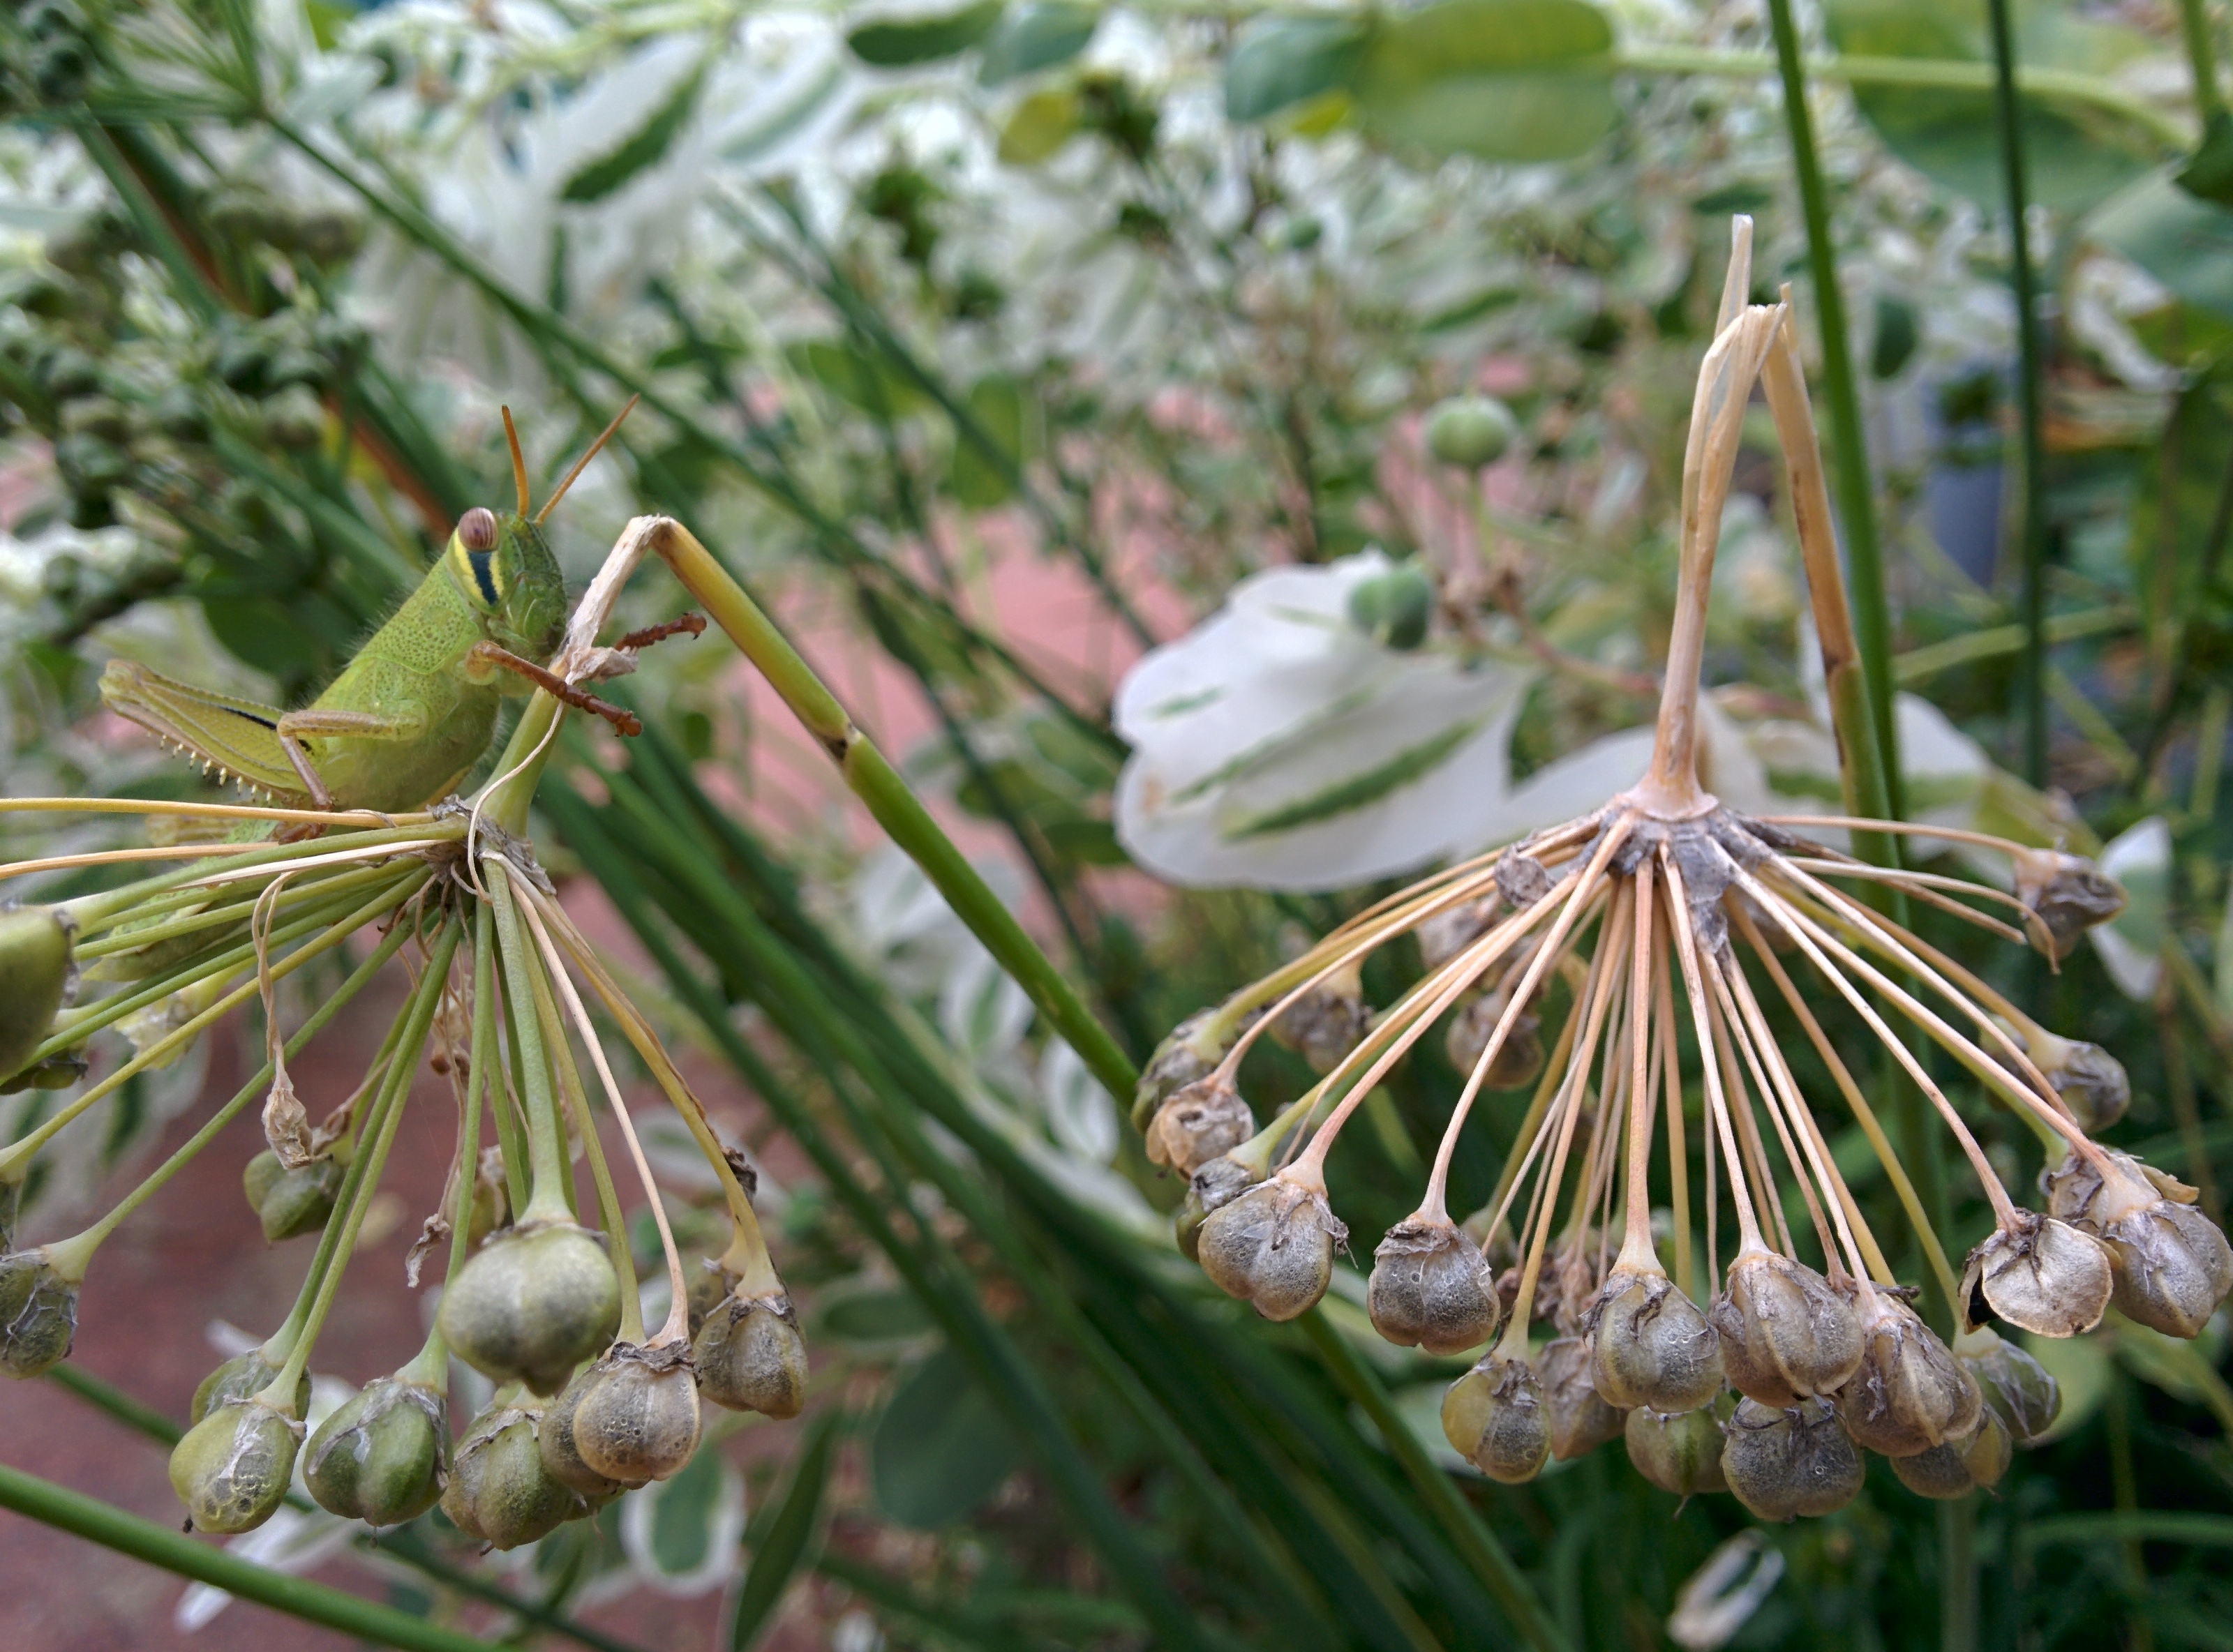 IMG_20150926_162344.jpg 하얀꽃 아래 설악초 열매에서 쉬는 어린 메뚜기 - 각시메뚜기 약충